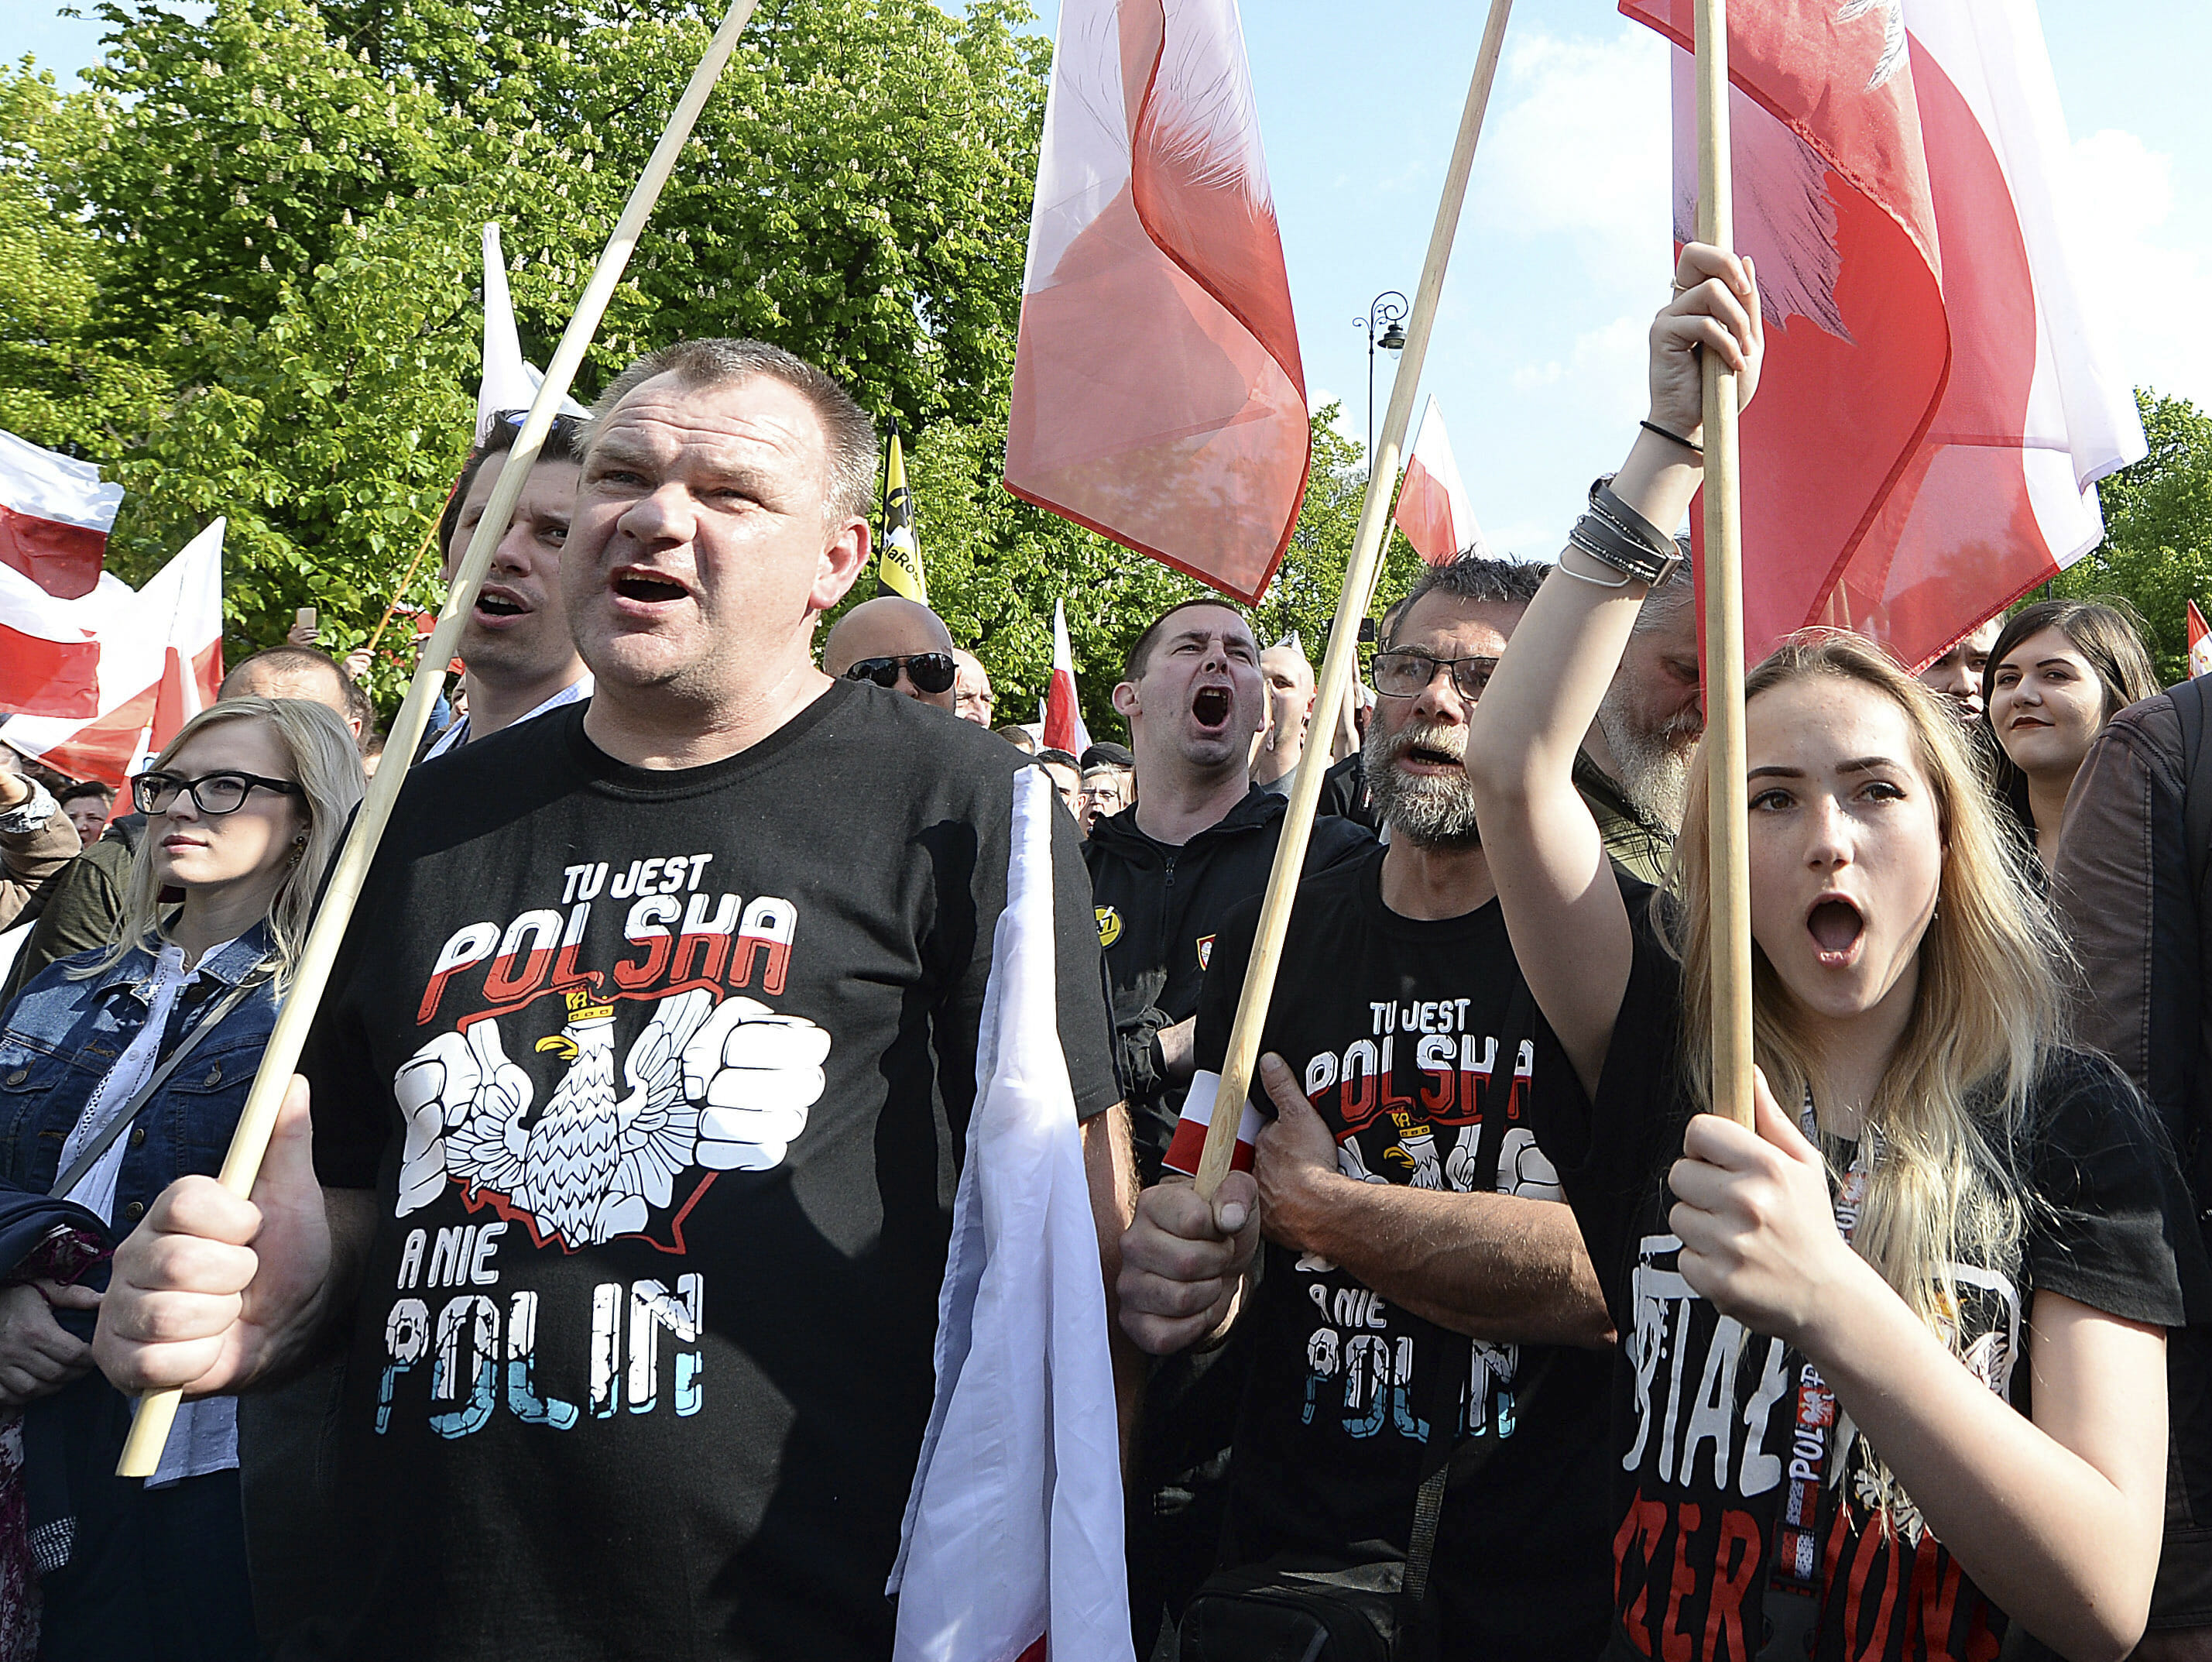 Polish nationalists protest